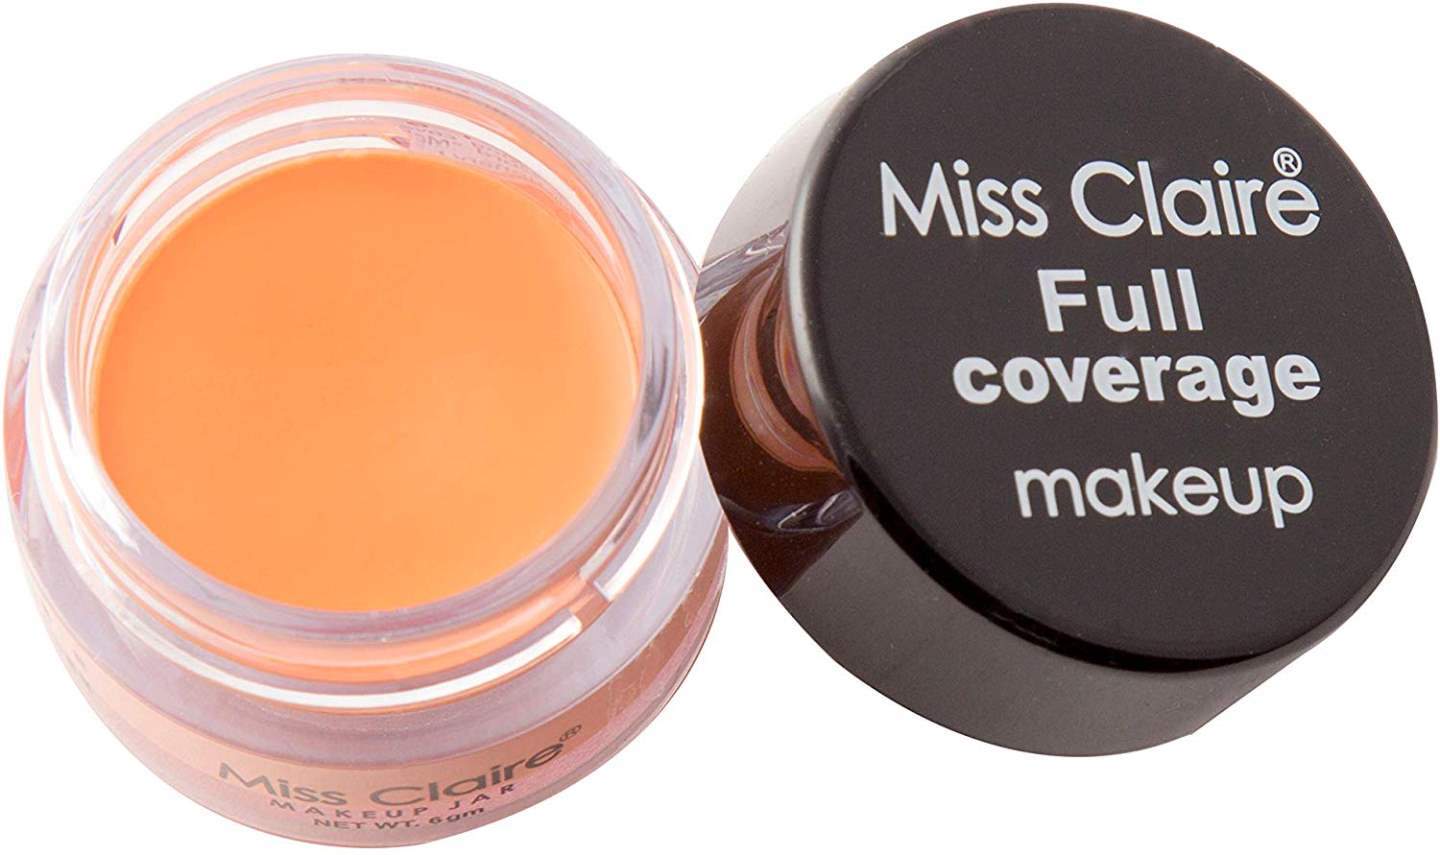 Buy Miss Claire Full Coverage Makeup + Concealer #11, Orange online usa [ USA ] 